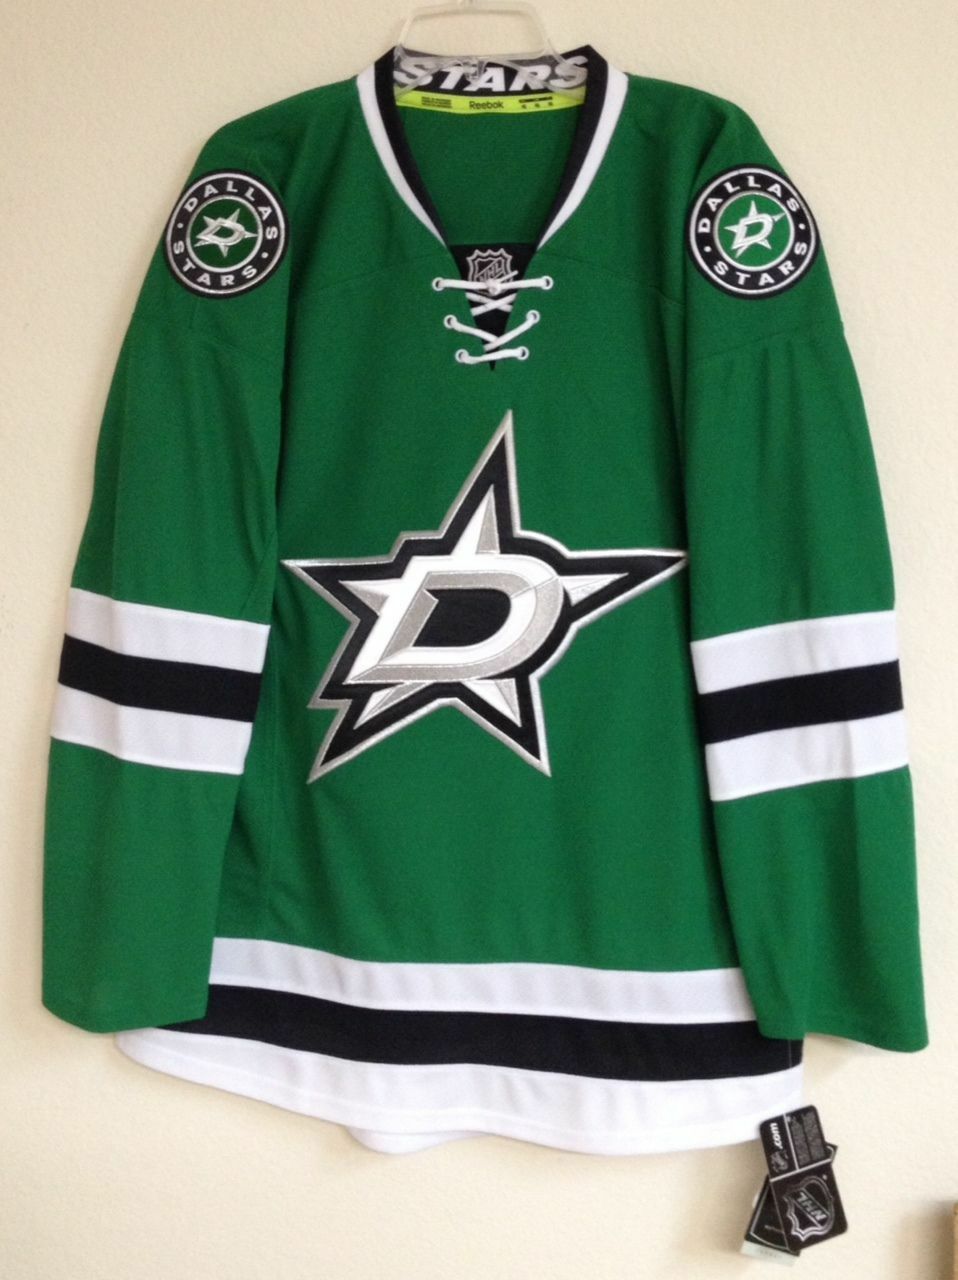 DALLAS STARS reebok NHL authentic genuine stitched hockey jersey green 46 Image 1